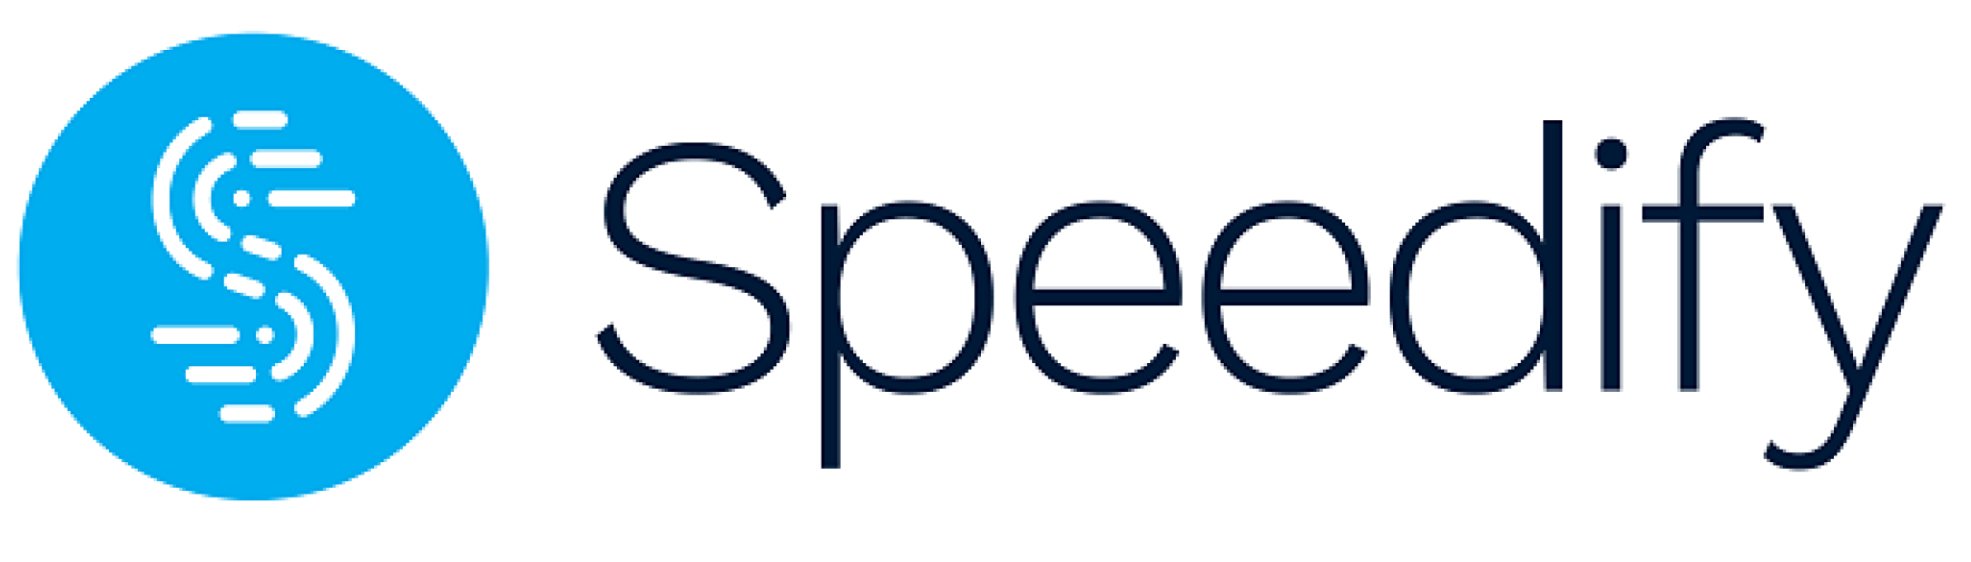 Speedify Logo Crop